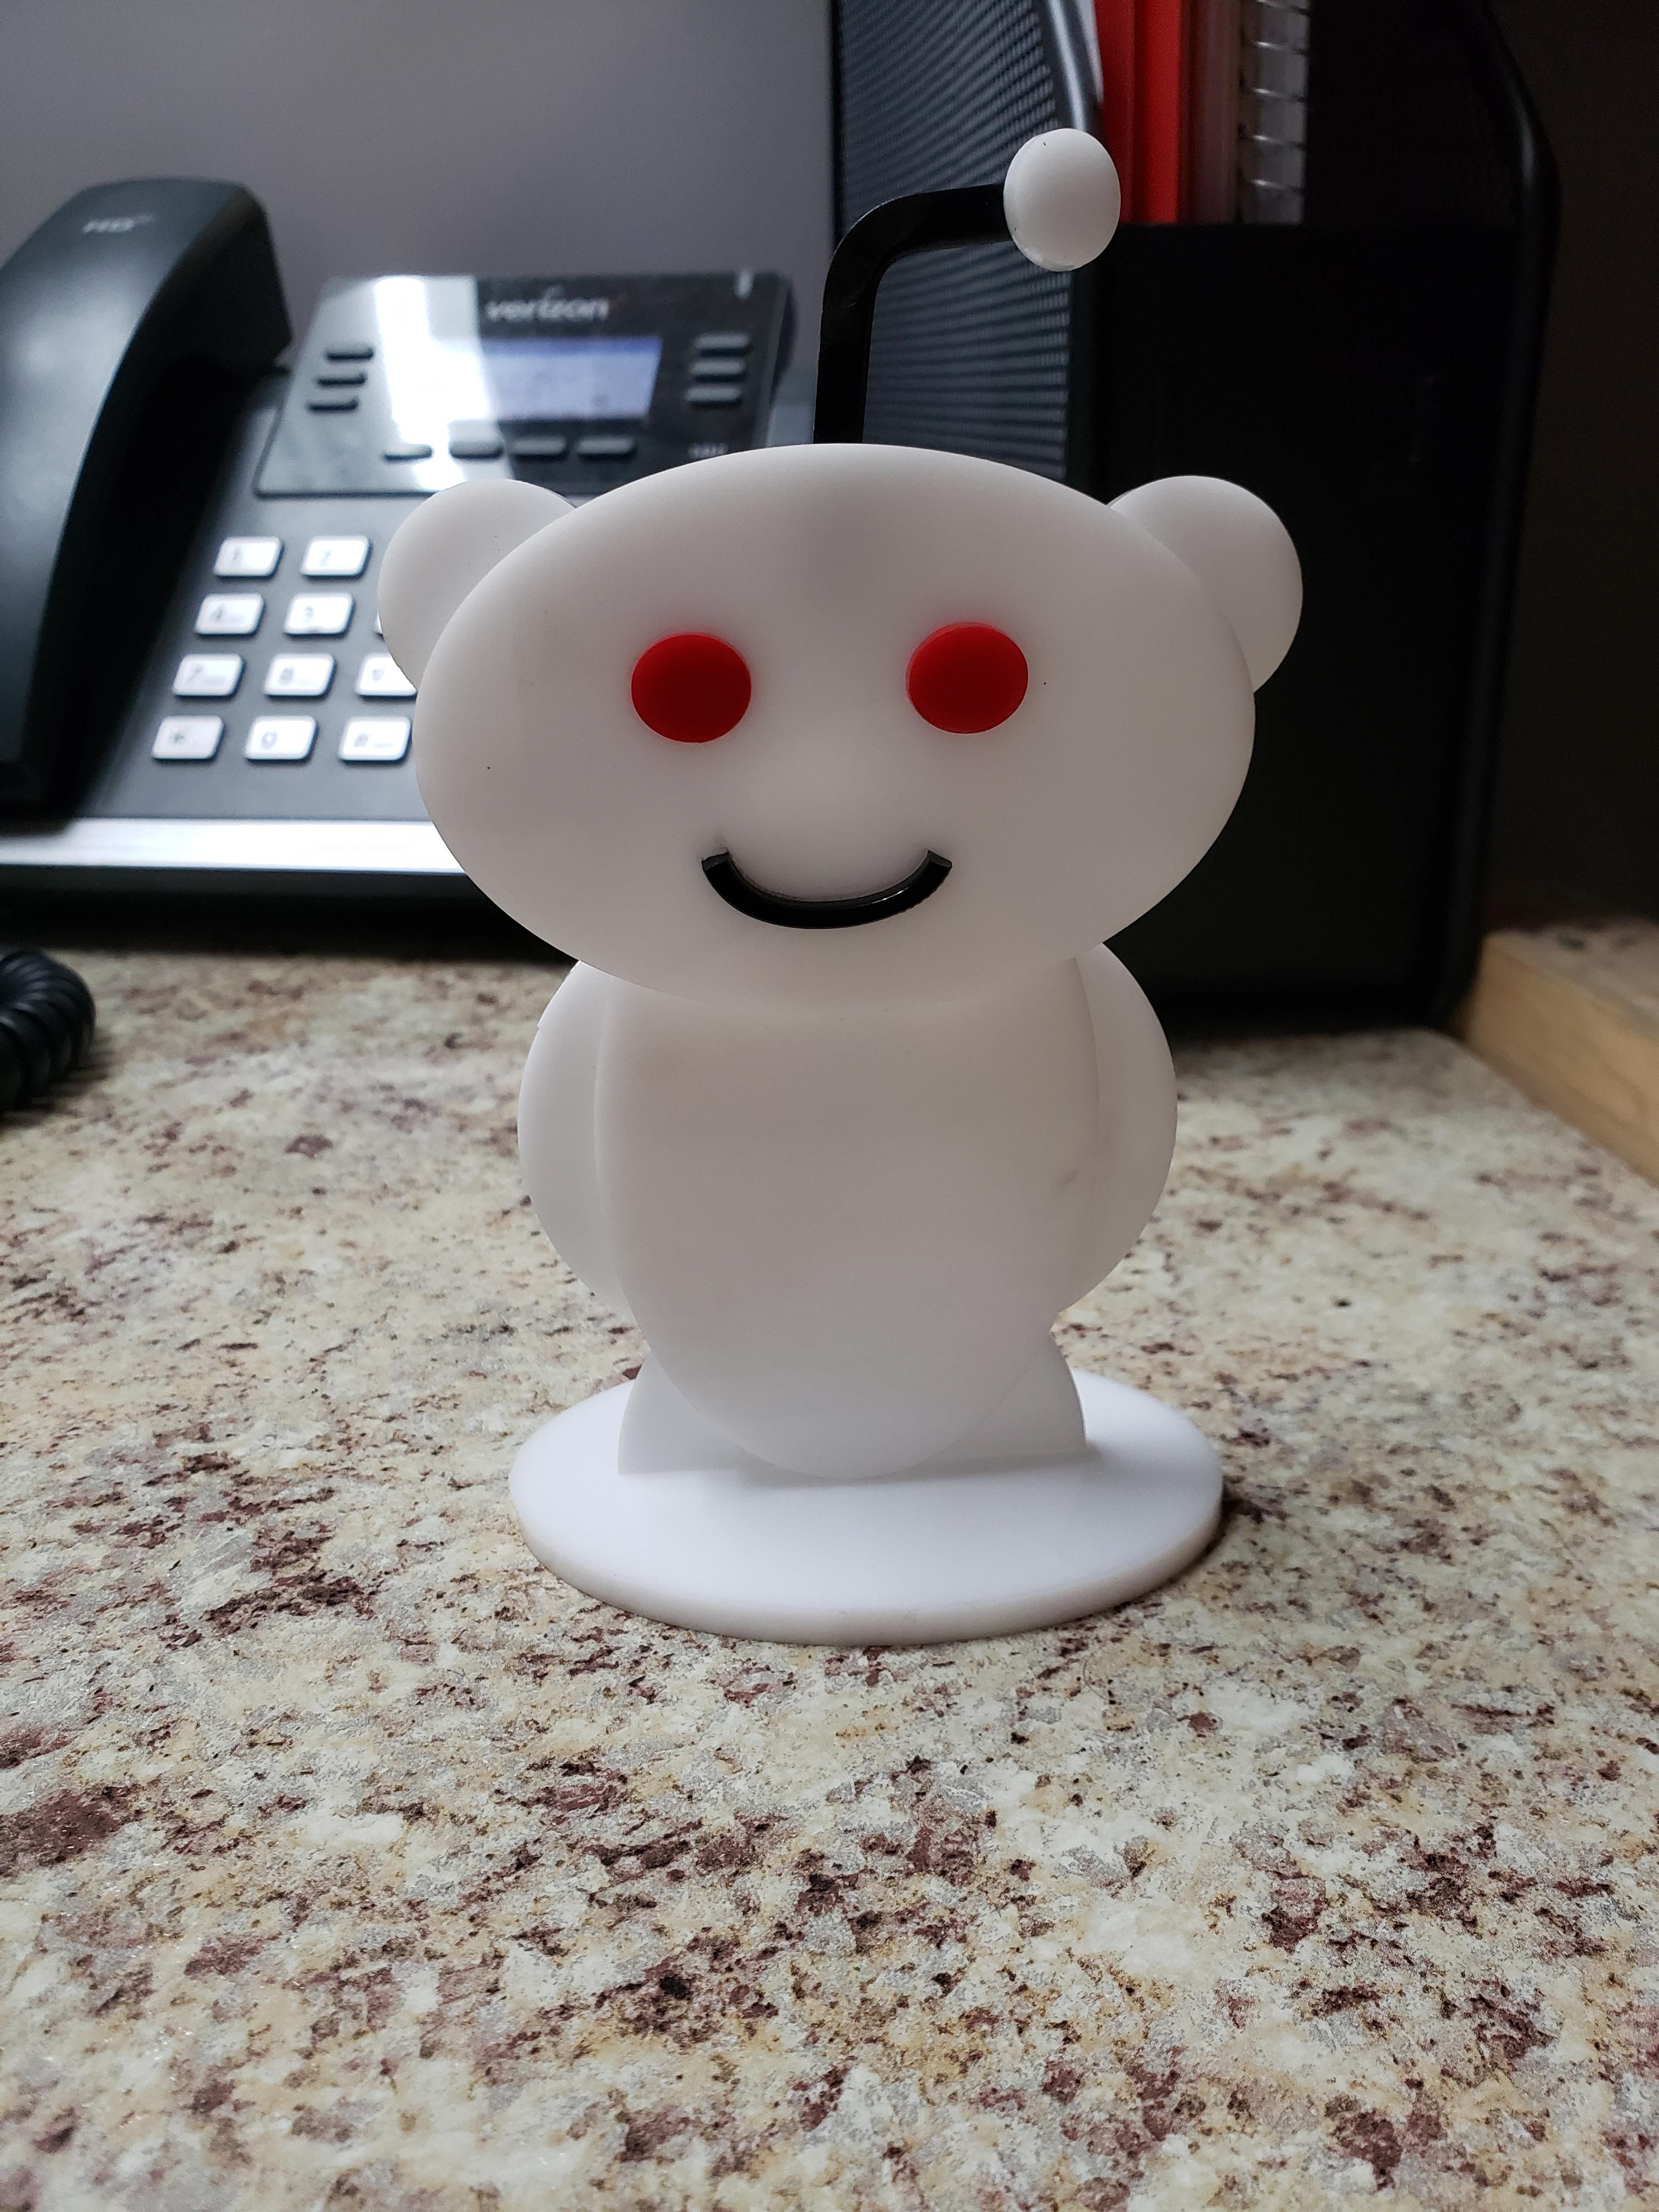 I work for a plastics company and made myself a desk friend :)